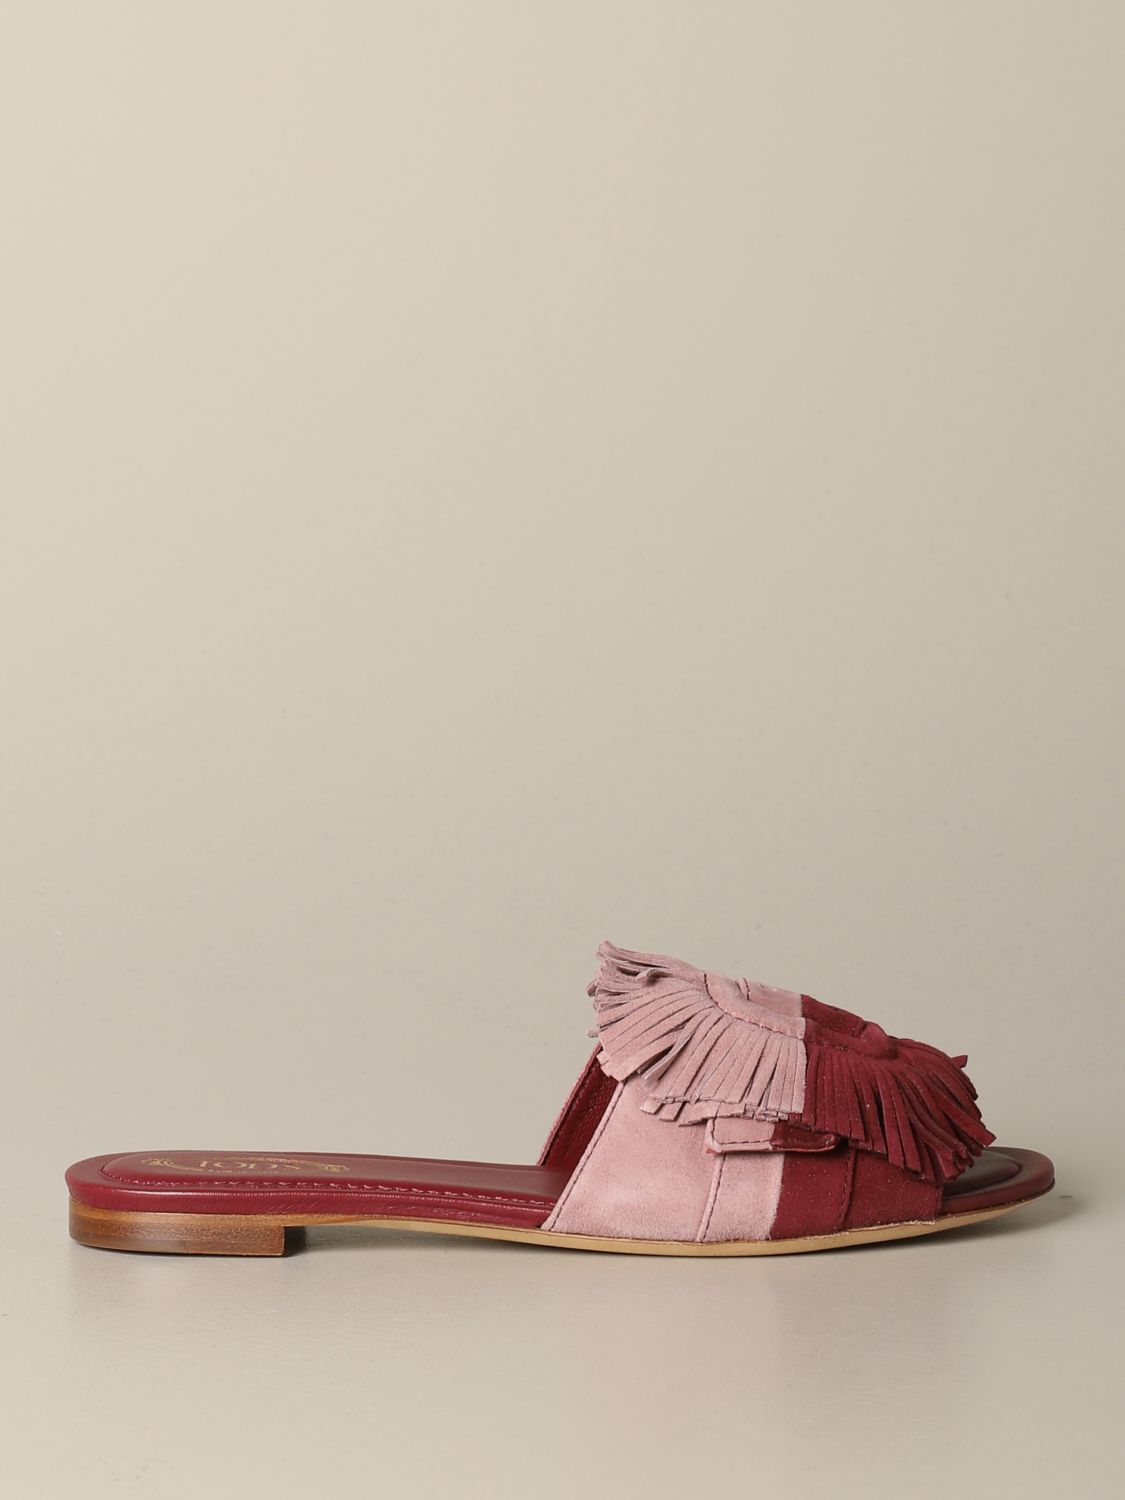 pink flat sandals uk